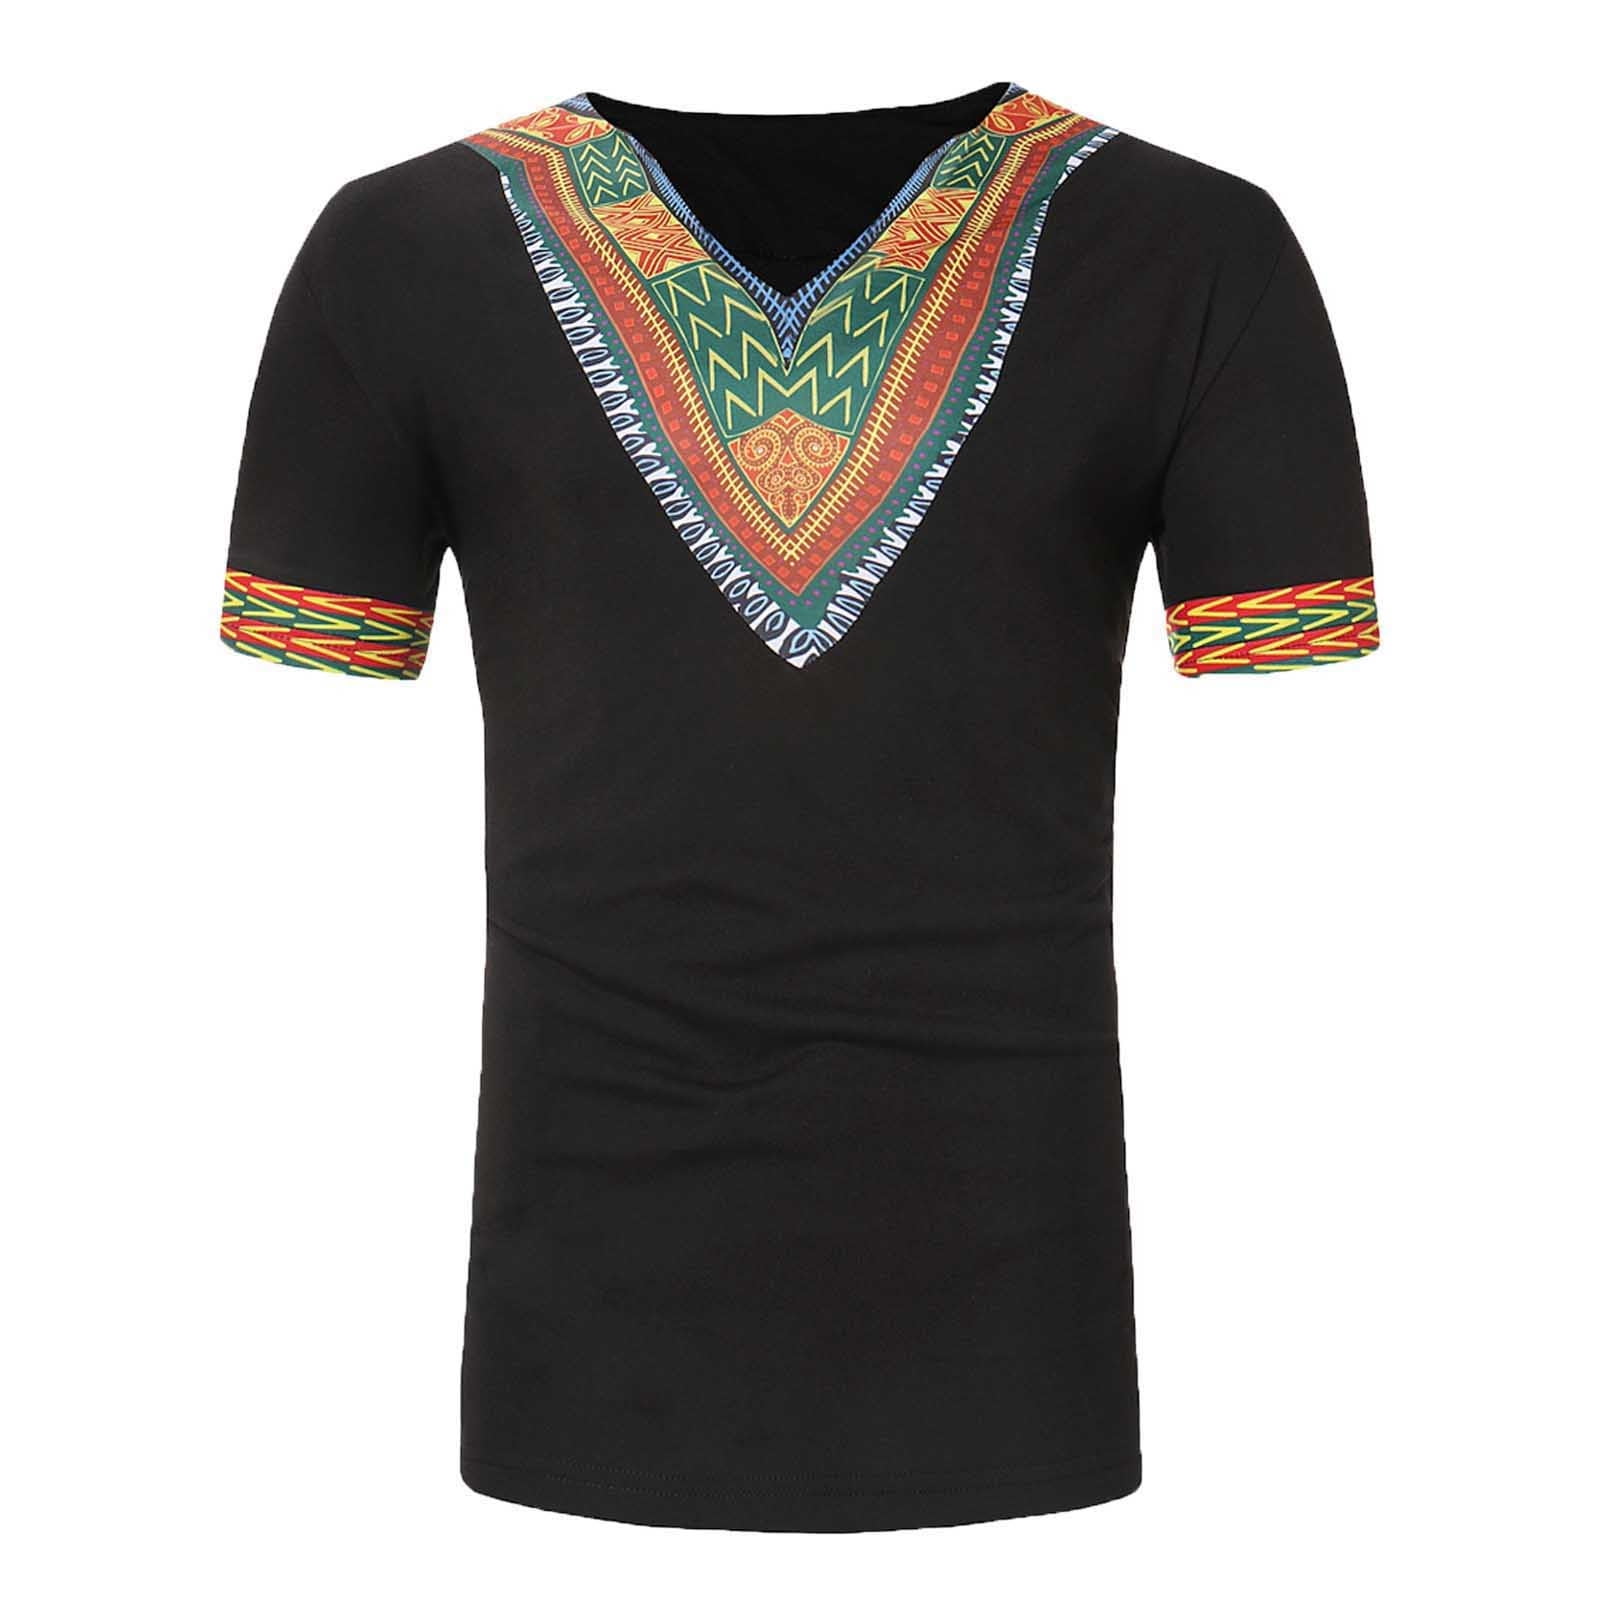 VSSSJ Ethnic Shirt for Men Regular Fit African Style Printed Short